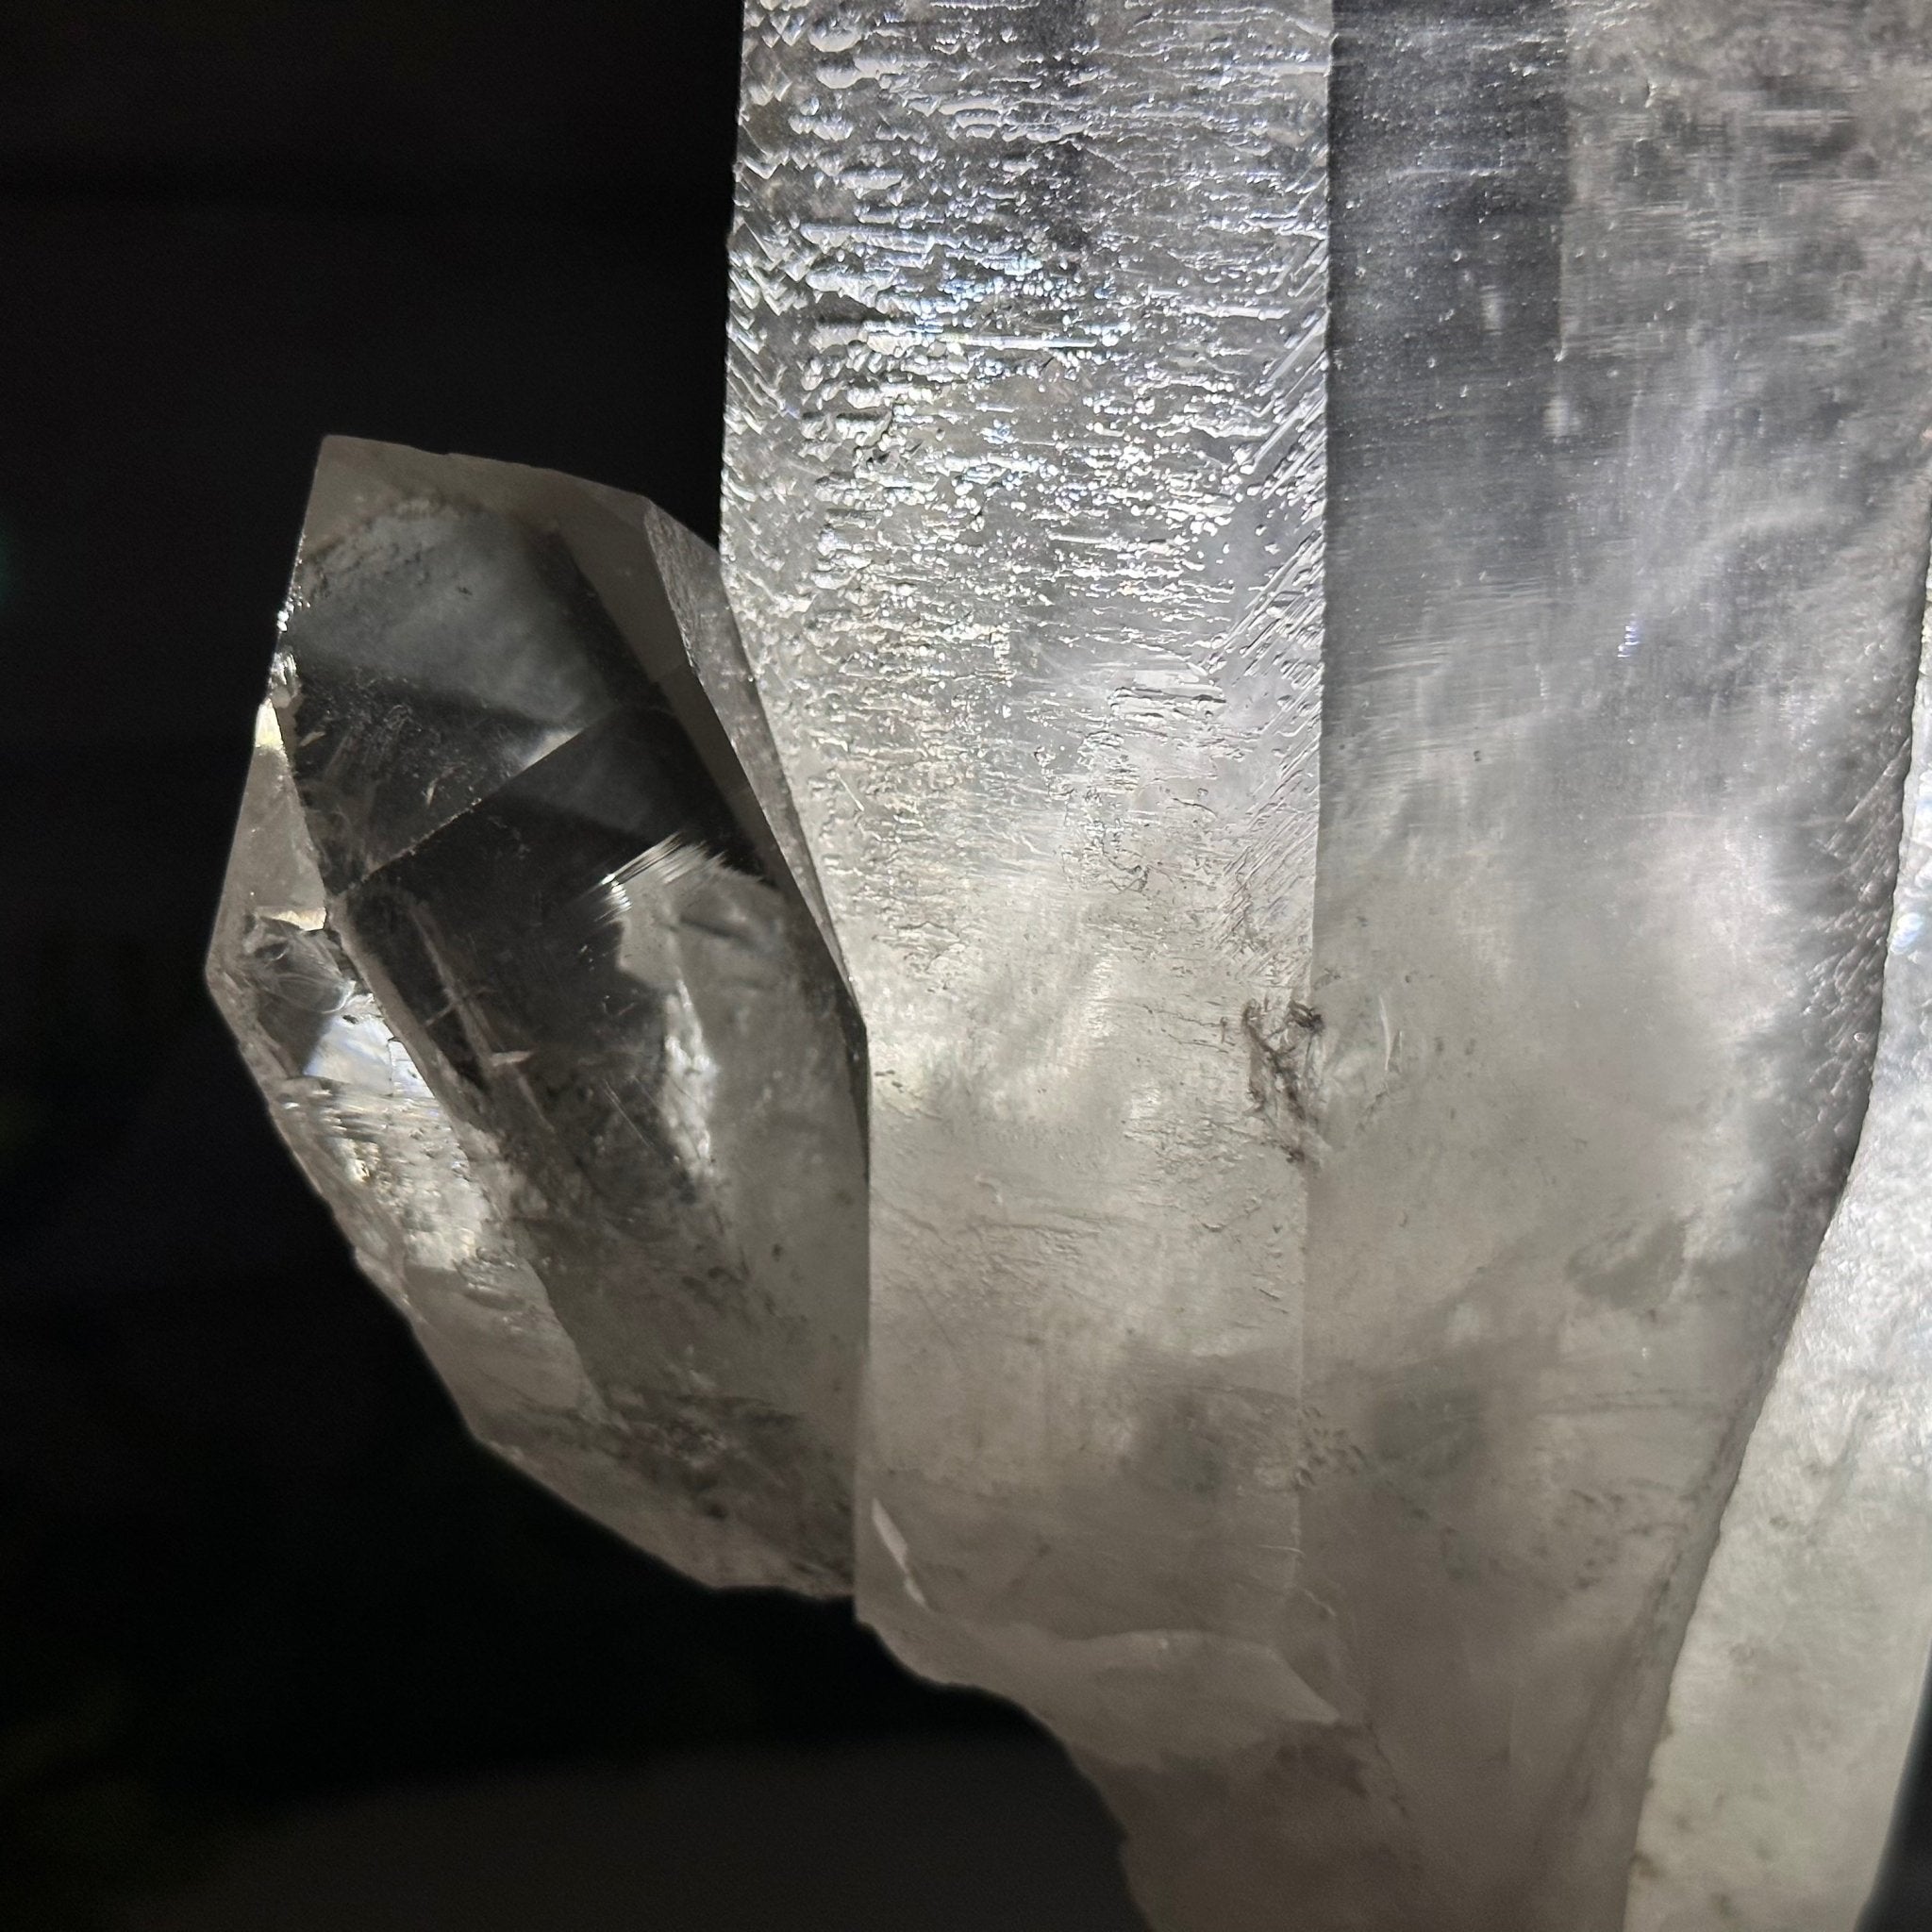 Smoky Quartz Crystal Point on a Metal Stand, 9.3" Tall Model #3122SQ-003 by Brazil Gems - Brazil GemsBrazil GemsSmoky Quartz Crystal Point on a Metal Stand, 9.3" Tall Model #3122SQ-003 by Brazil GemsCrystal Points3122SQ-003